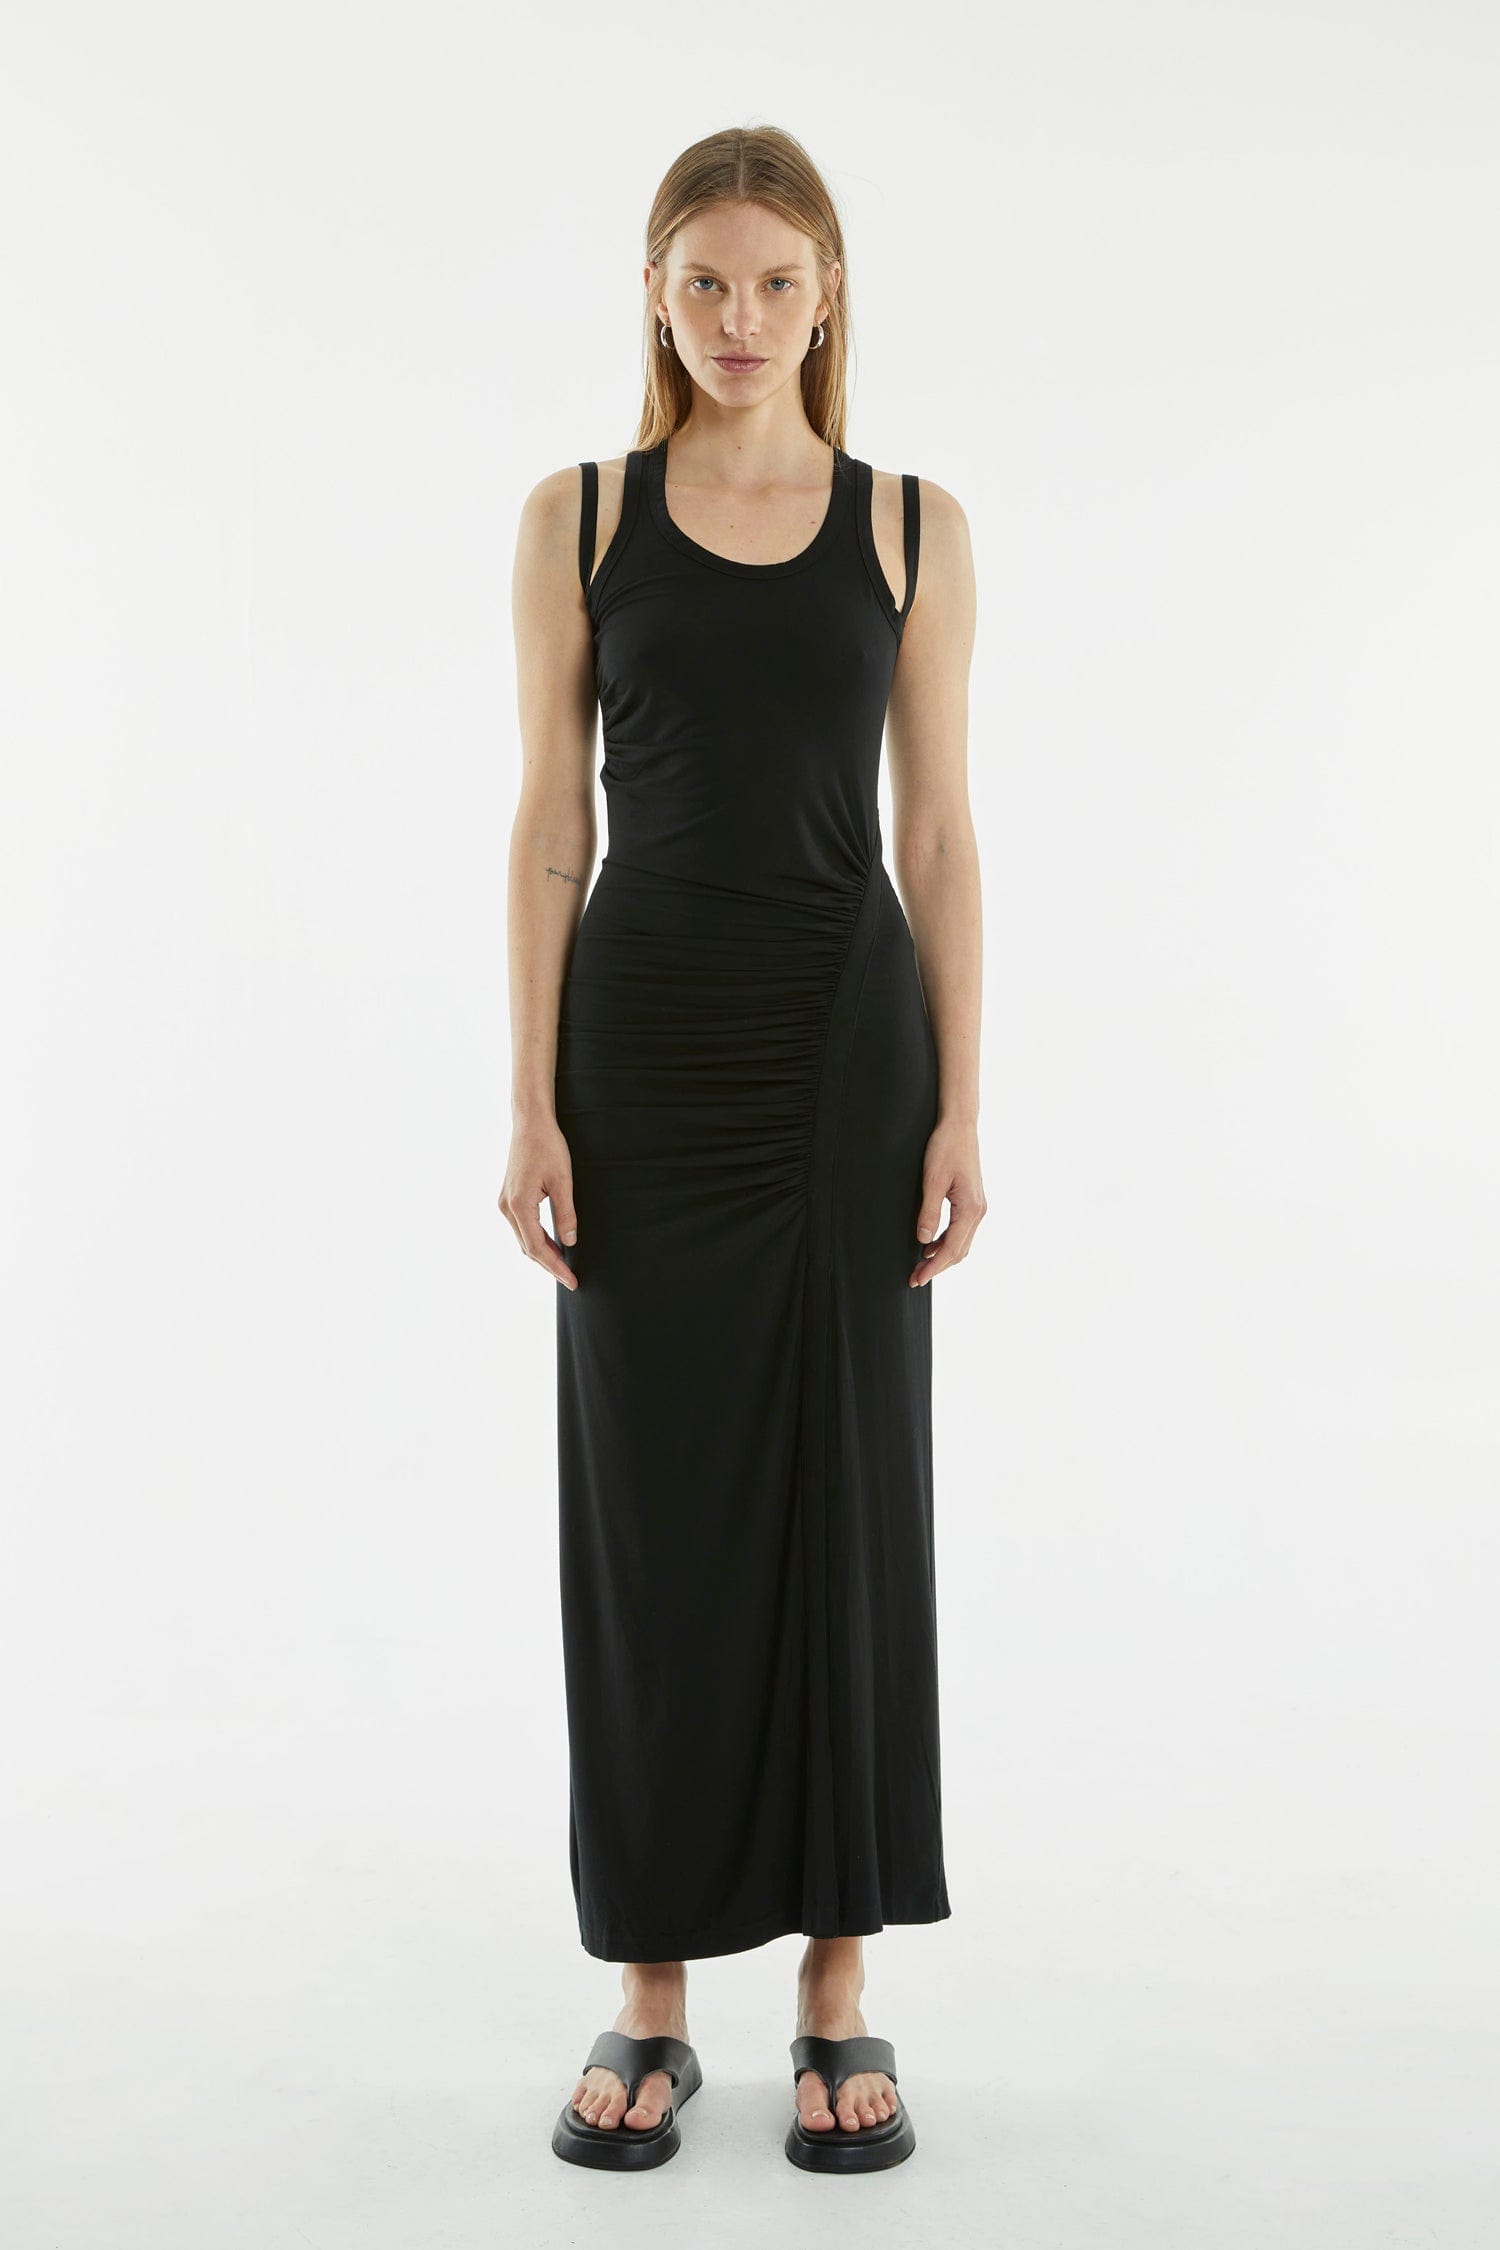 DRESSES | Third Form | Dresses for Women | Australian Designer — THIRD FORM